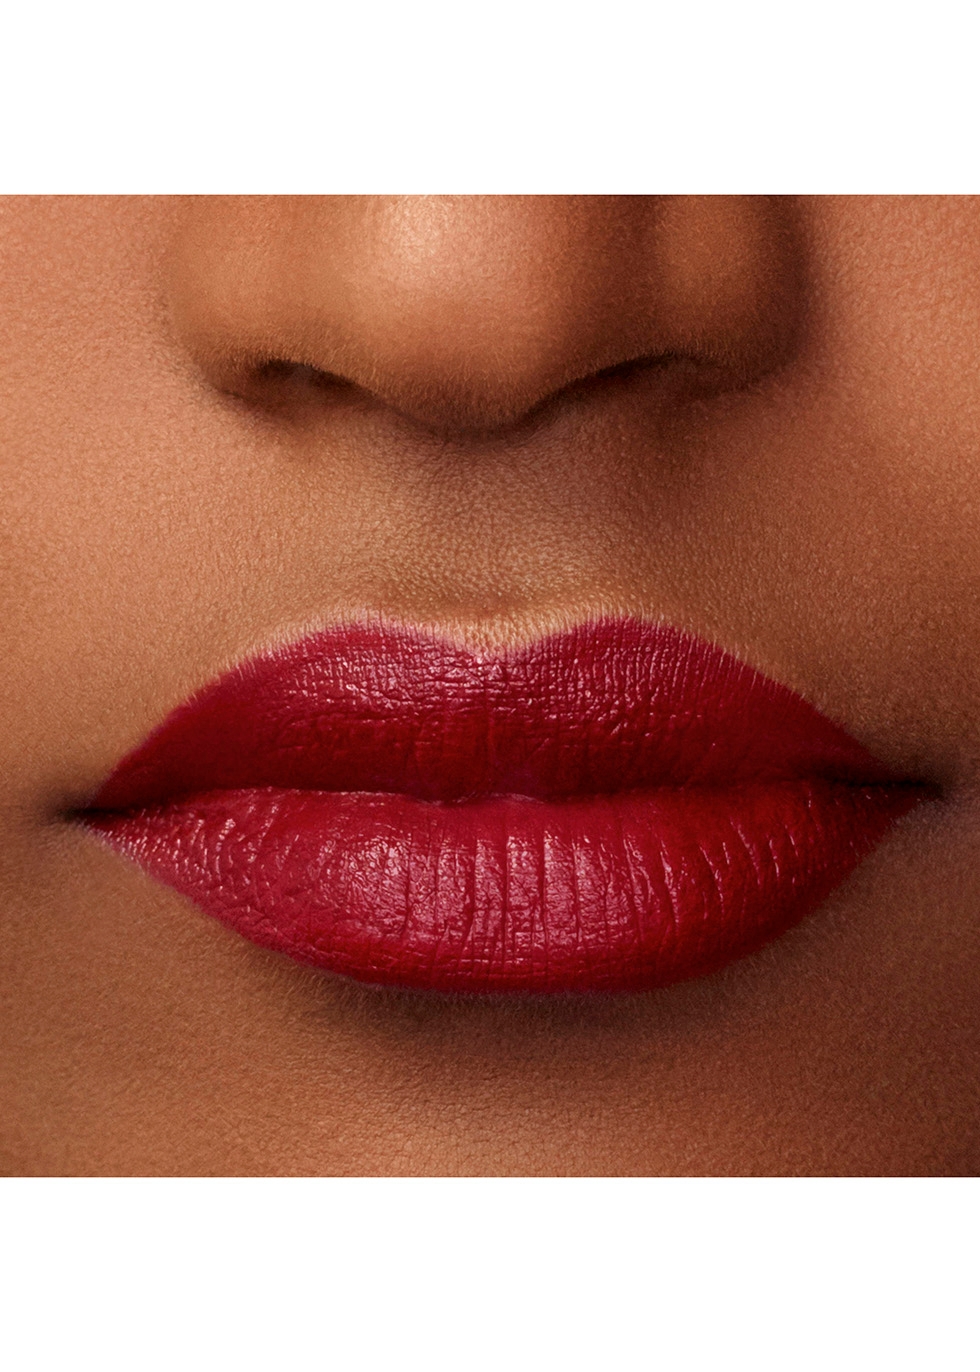 armani lipstick